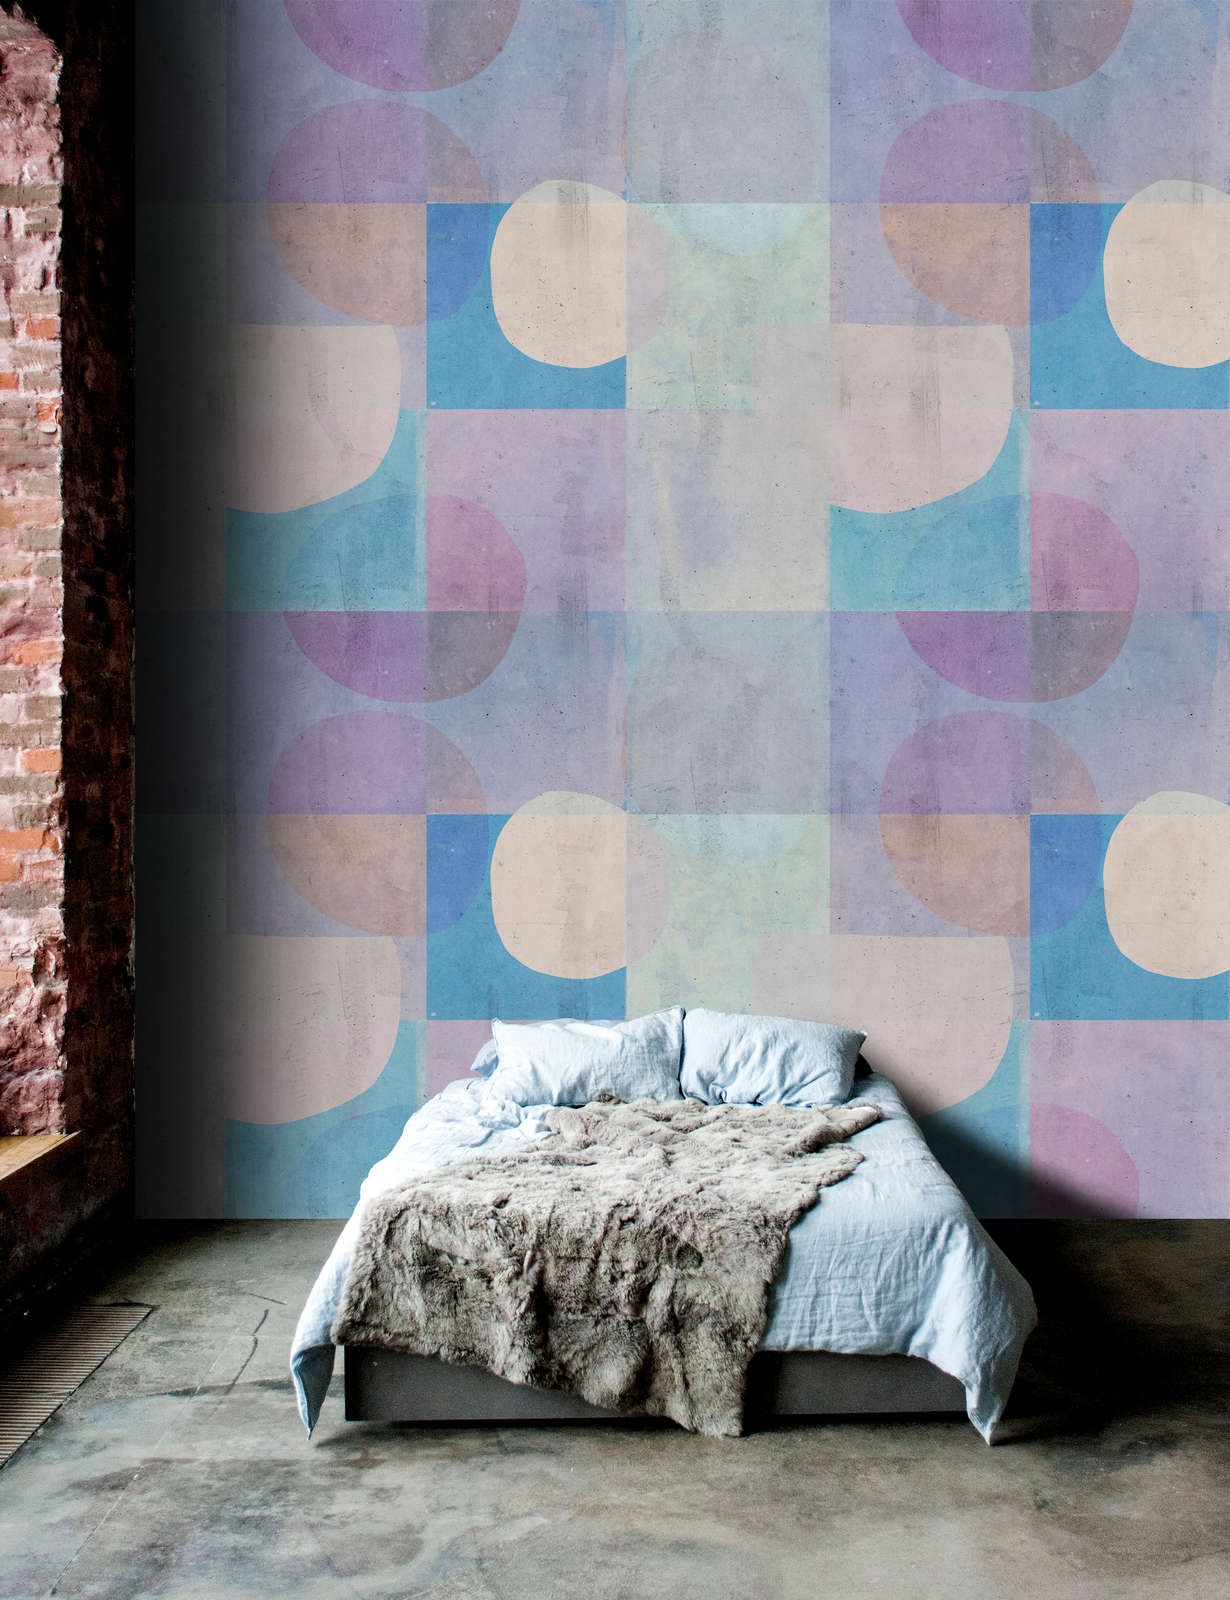             Photo wallpaper »elija 2« - retro pattern in concrete look - blue, purple | Smooth, slightly pearlescent non-woven fabric
        